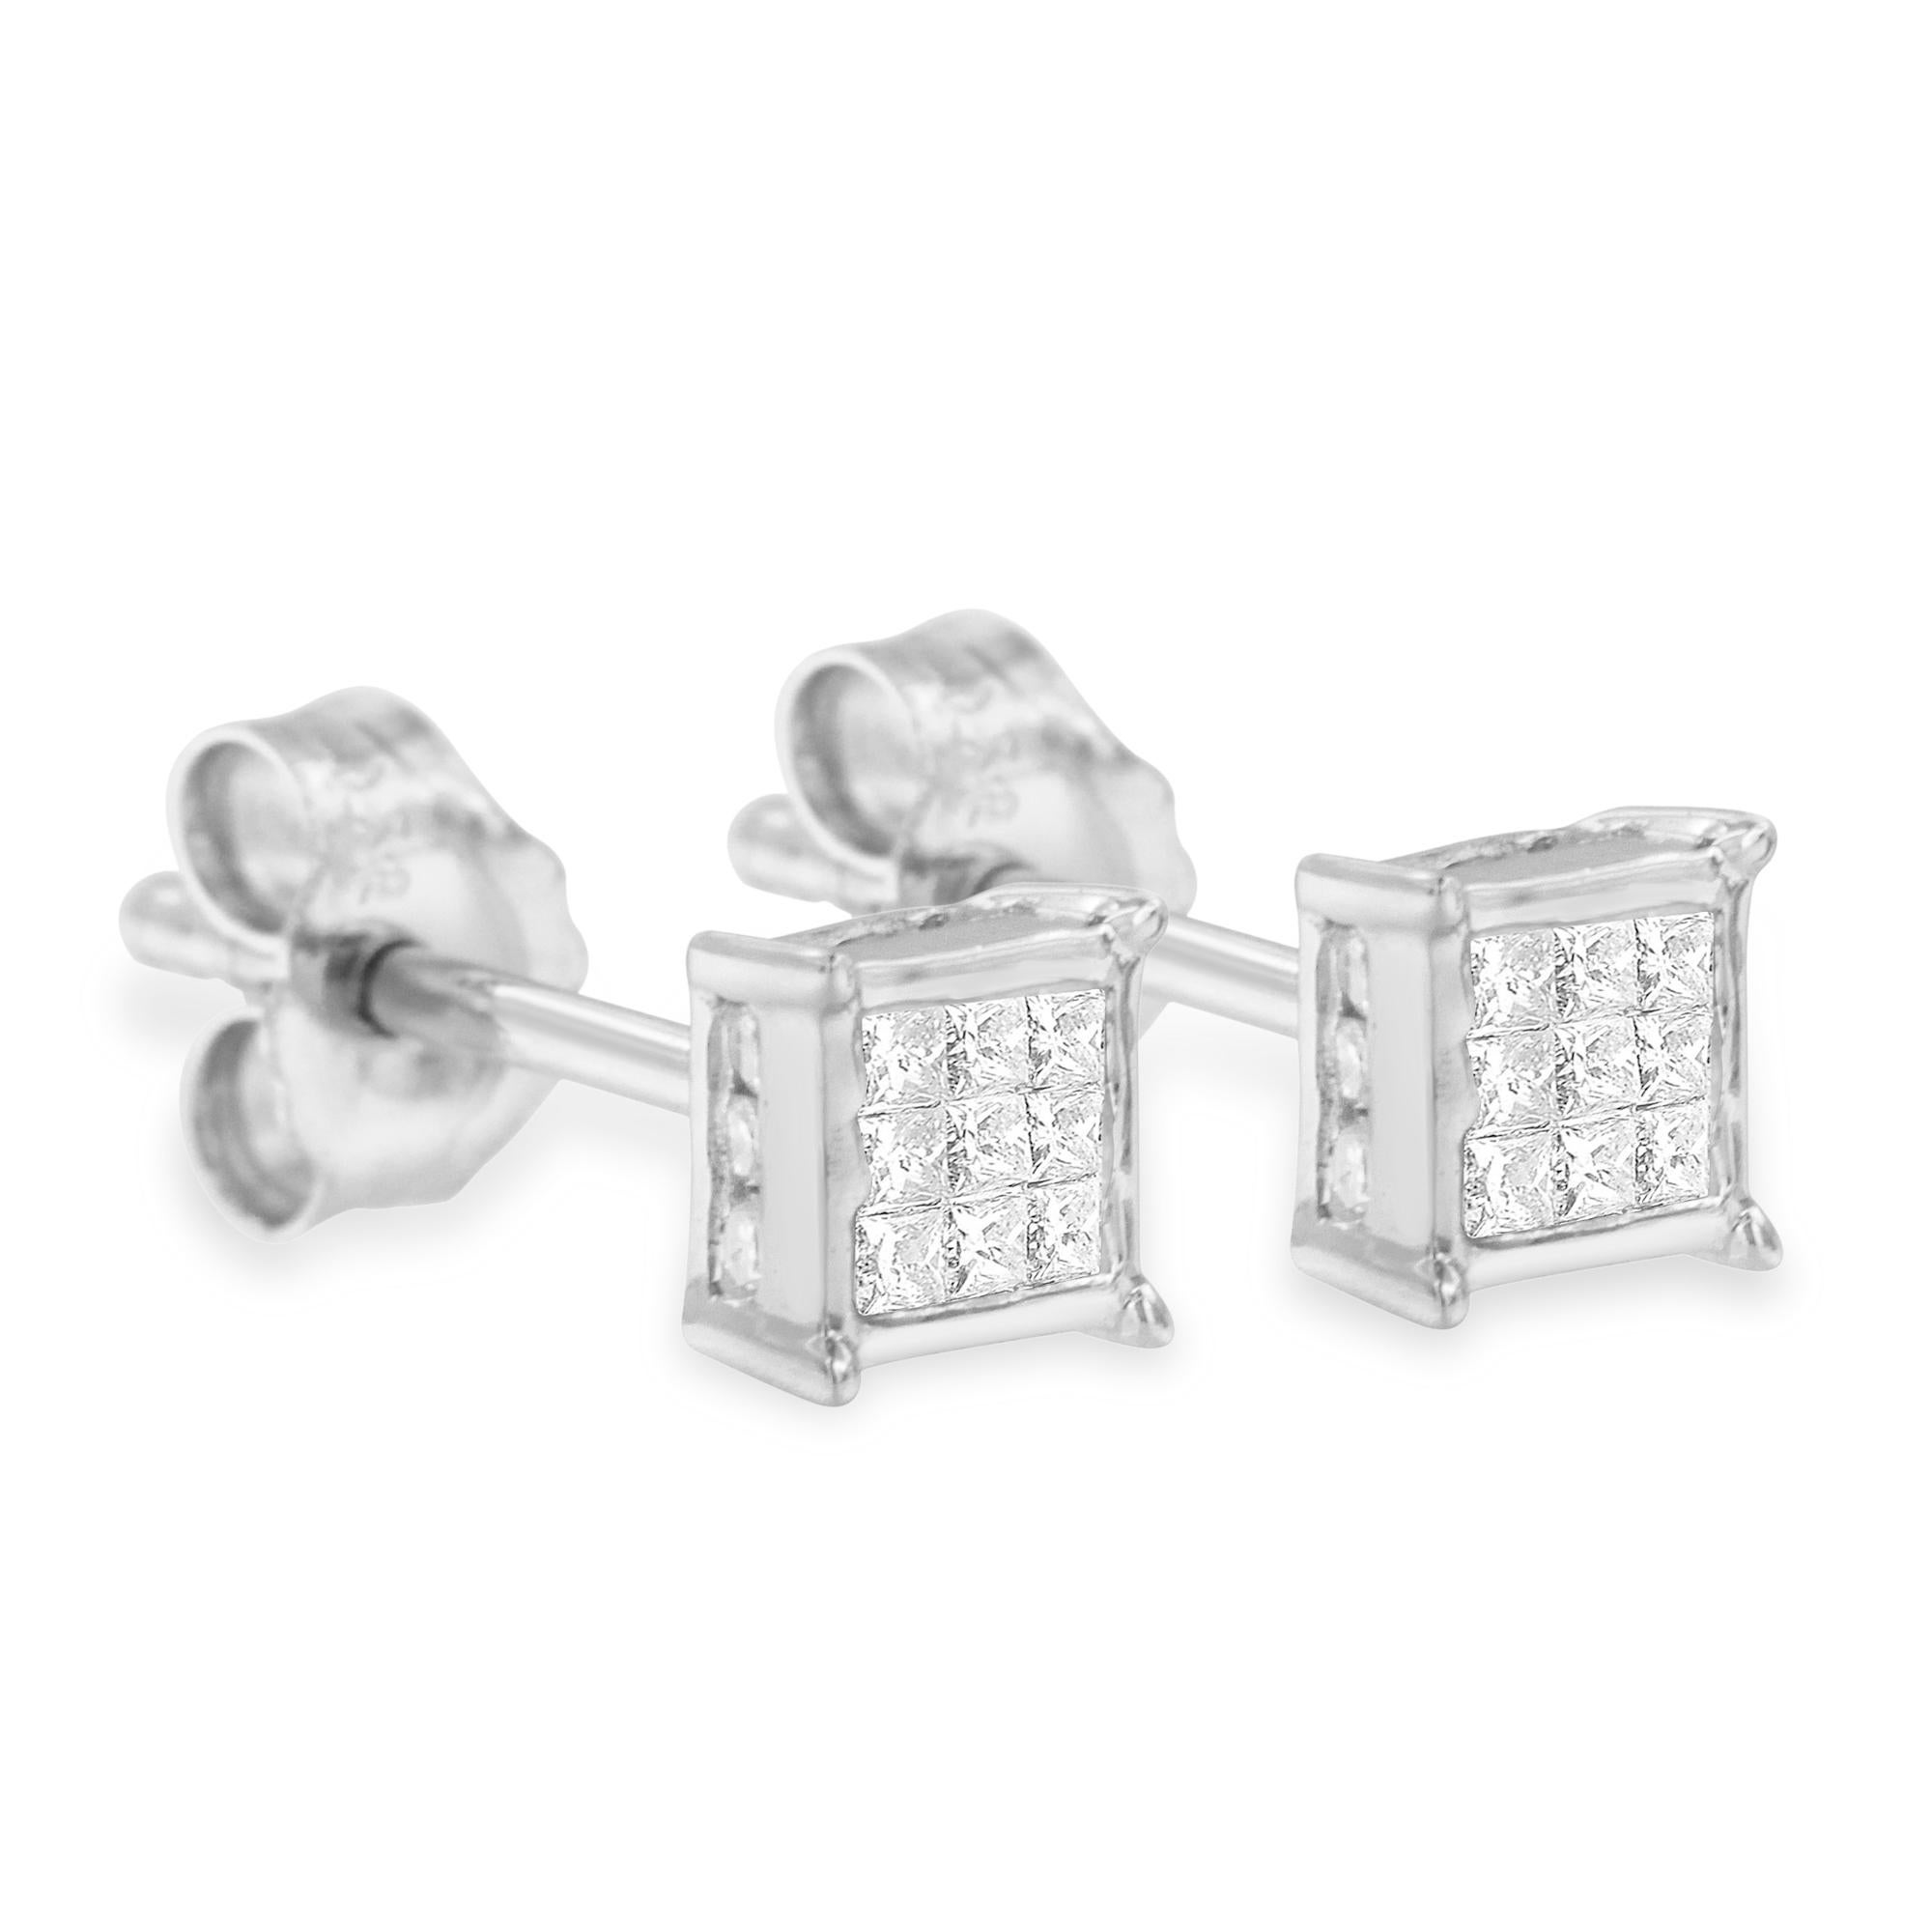 0.3 carat diamond earrings